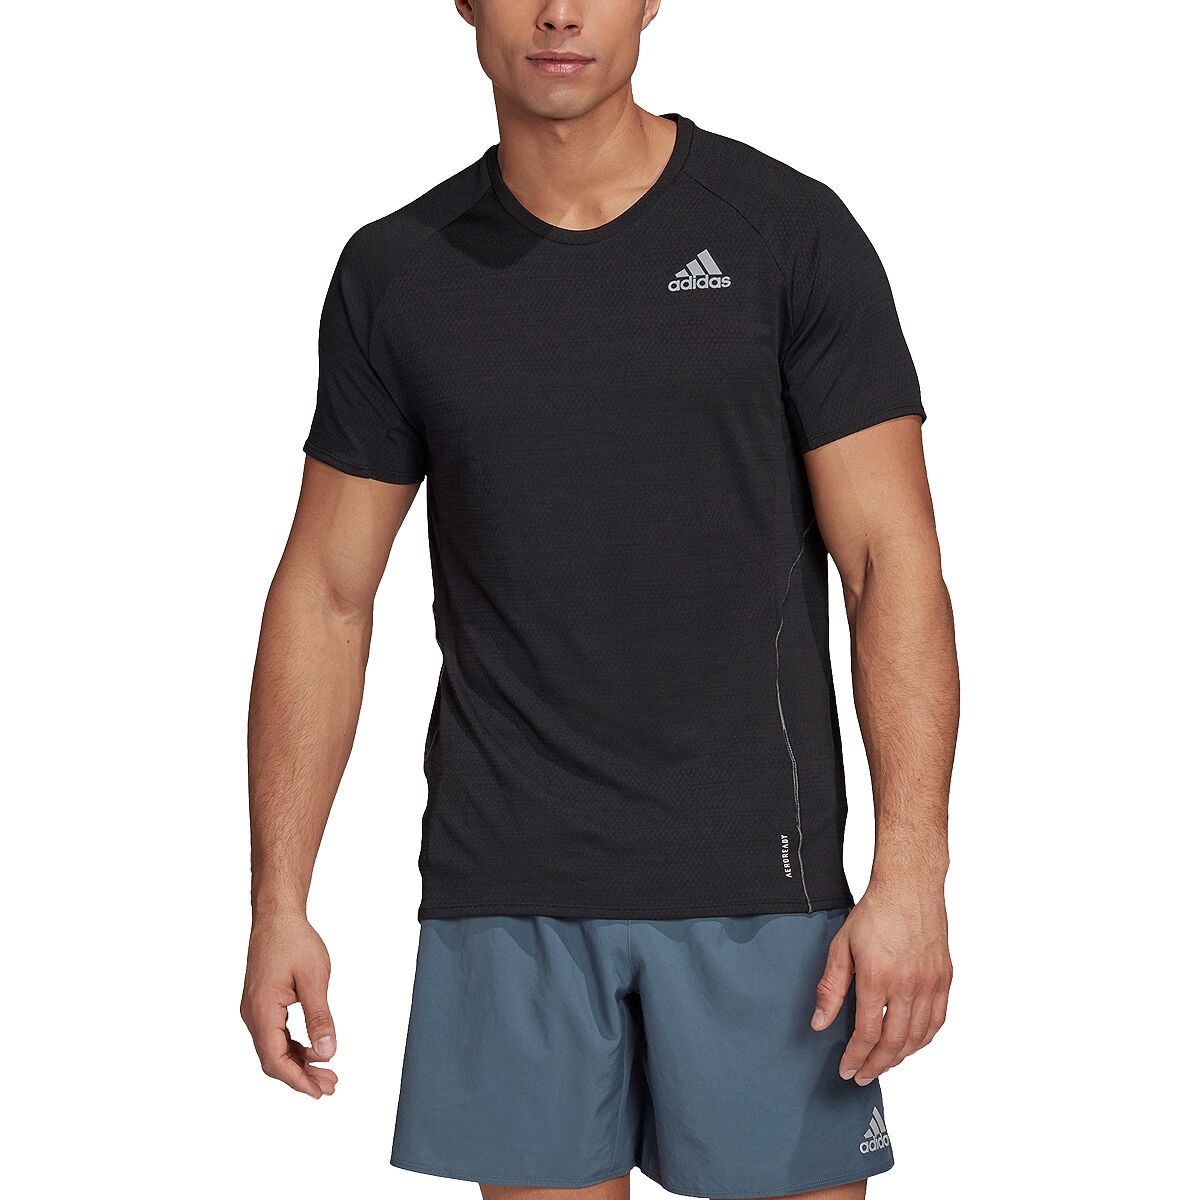 Adidas Runner T-Shirt - Men's - Hike & Camp